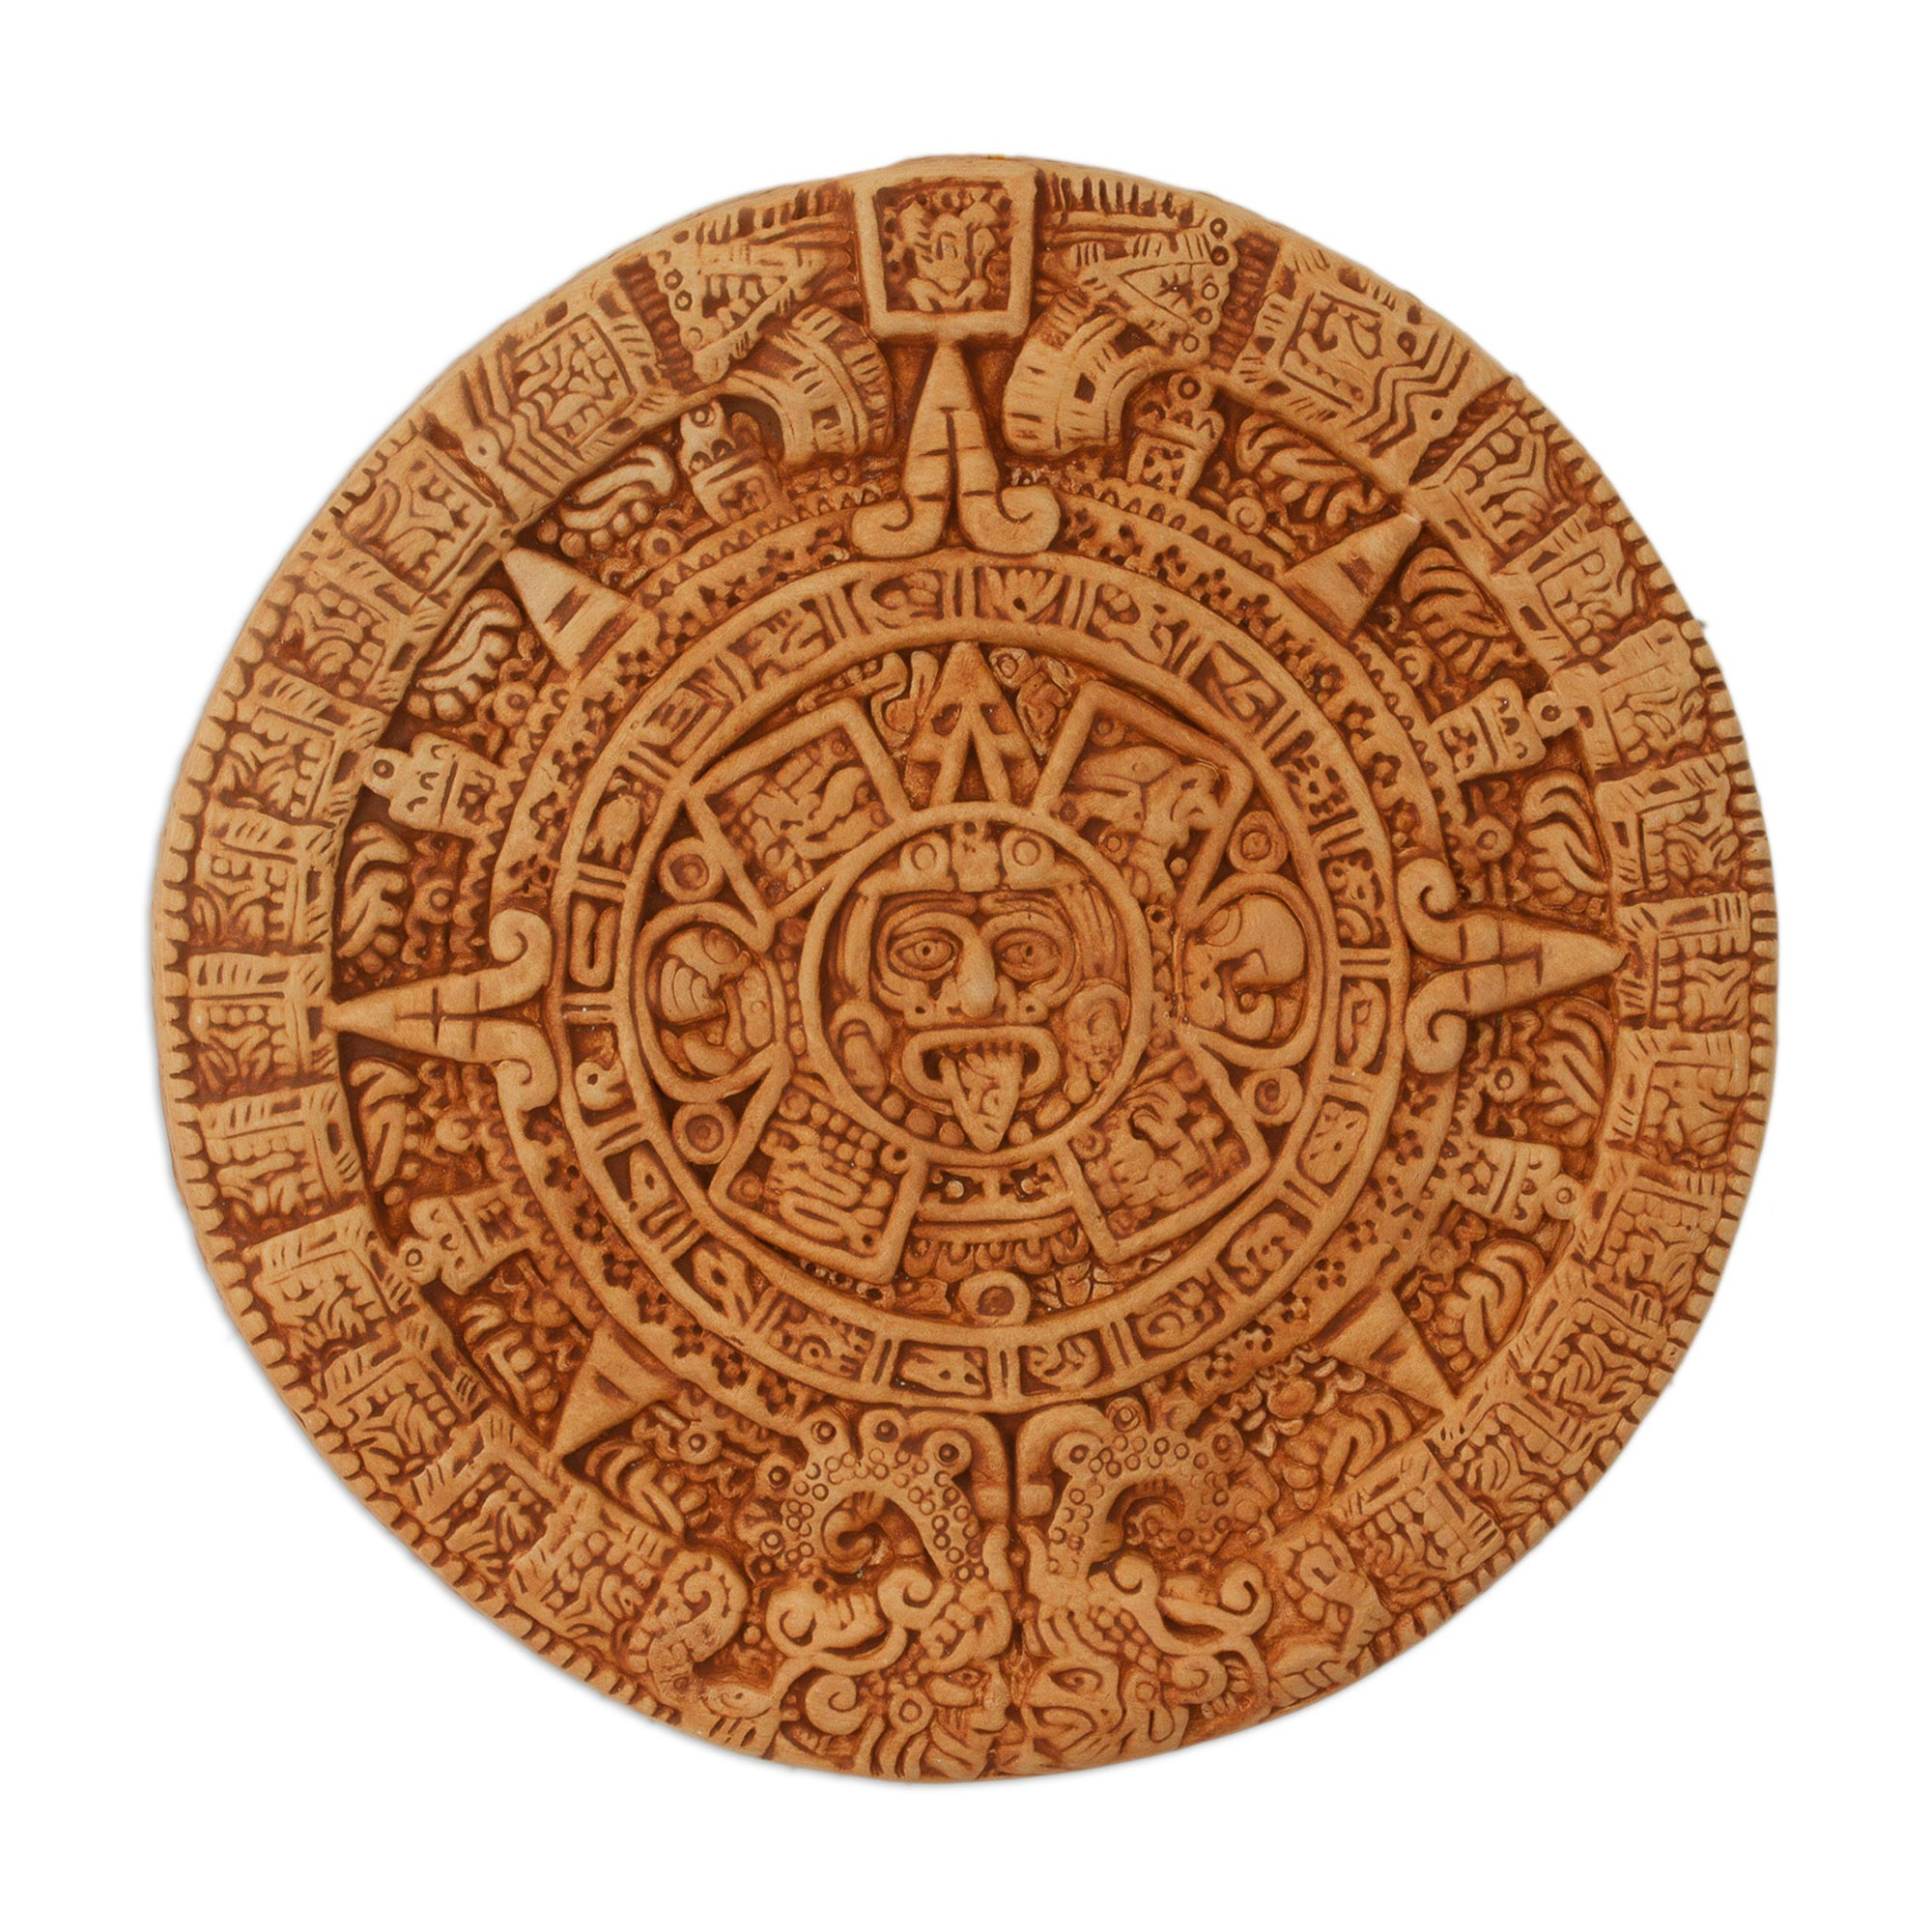 Календарь майя картинки. Древний Ацтекский календарь. Солнечный календарь древних ацтеков. Древний календарь Майя. Камень солнца ацтеков.